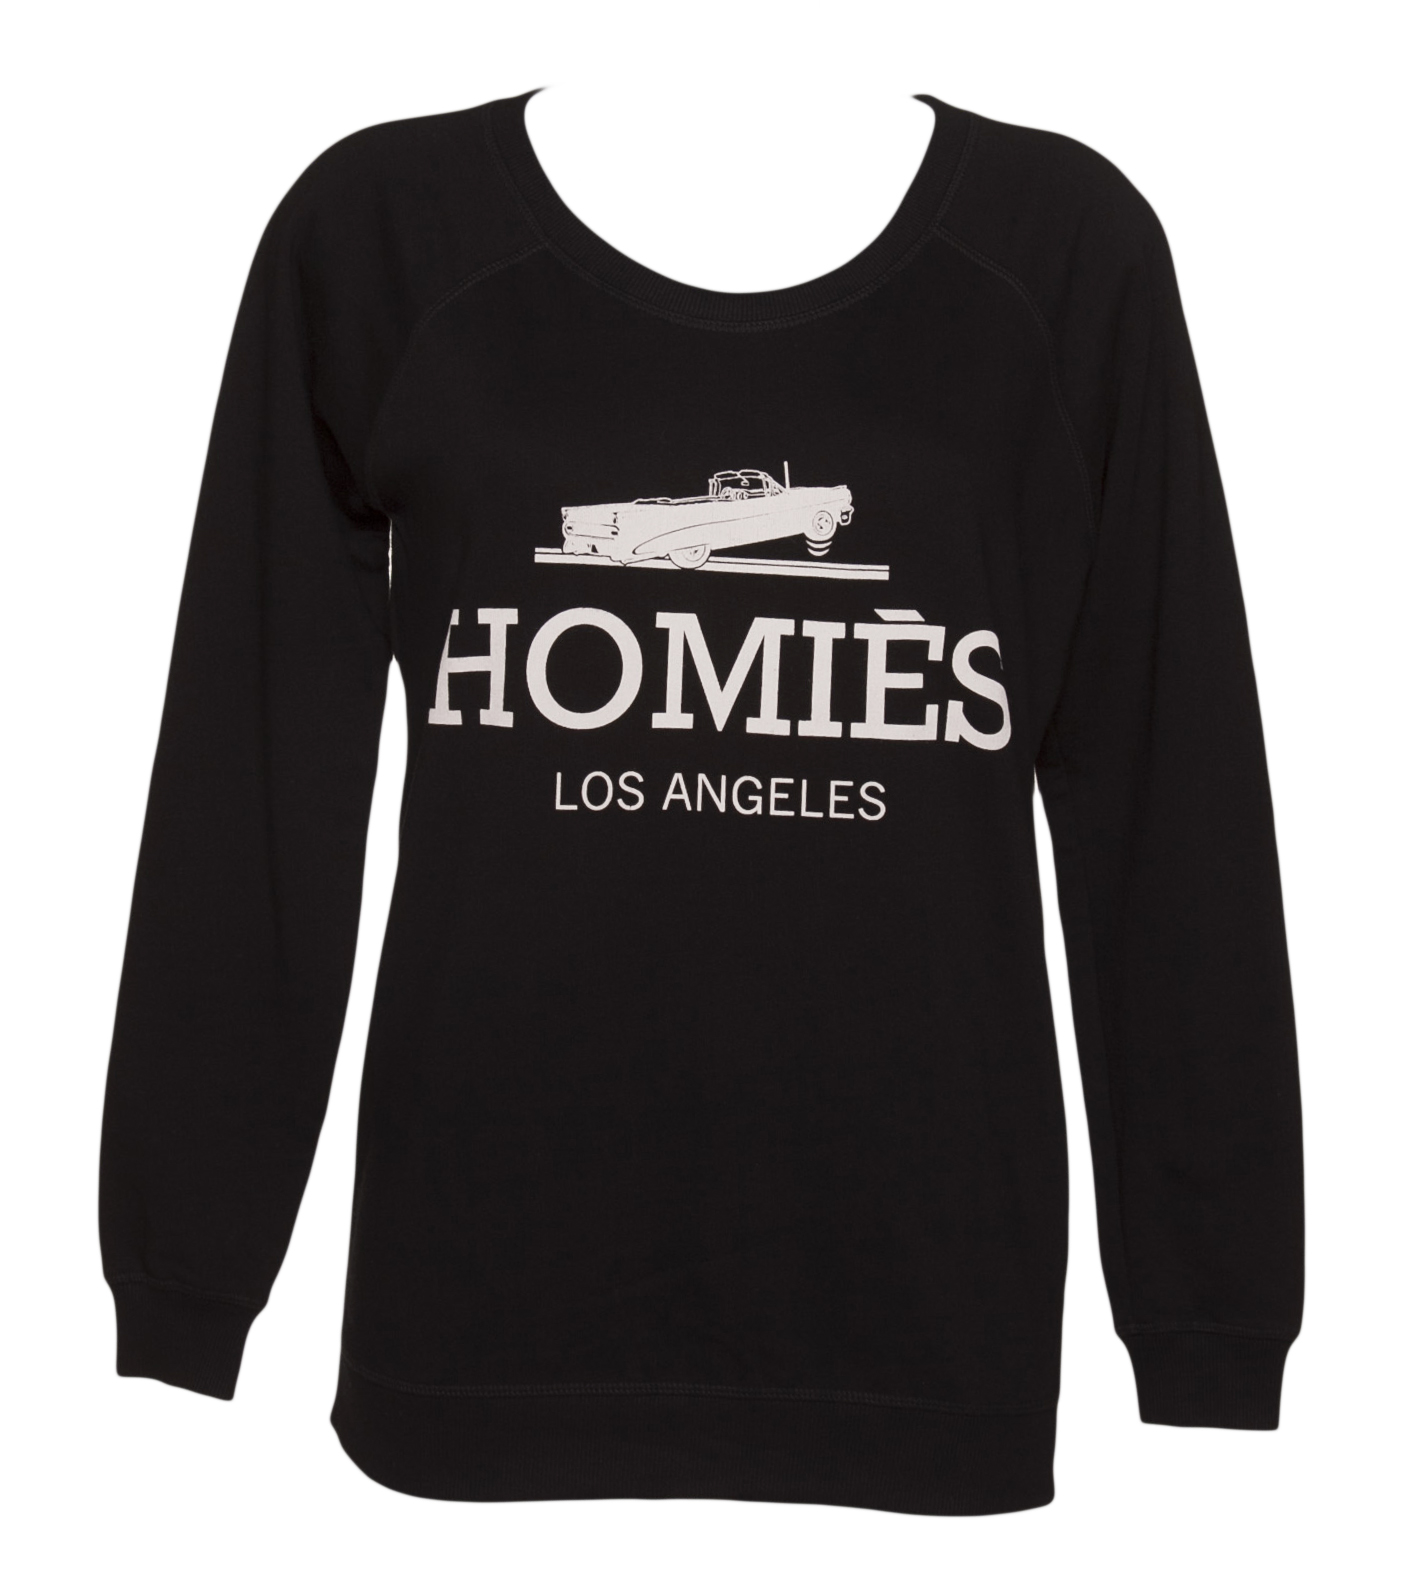 Ladies Black Homies Parody Sweater from Brand